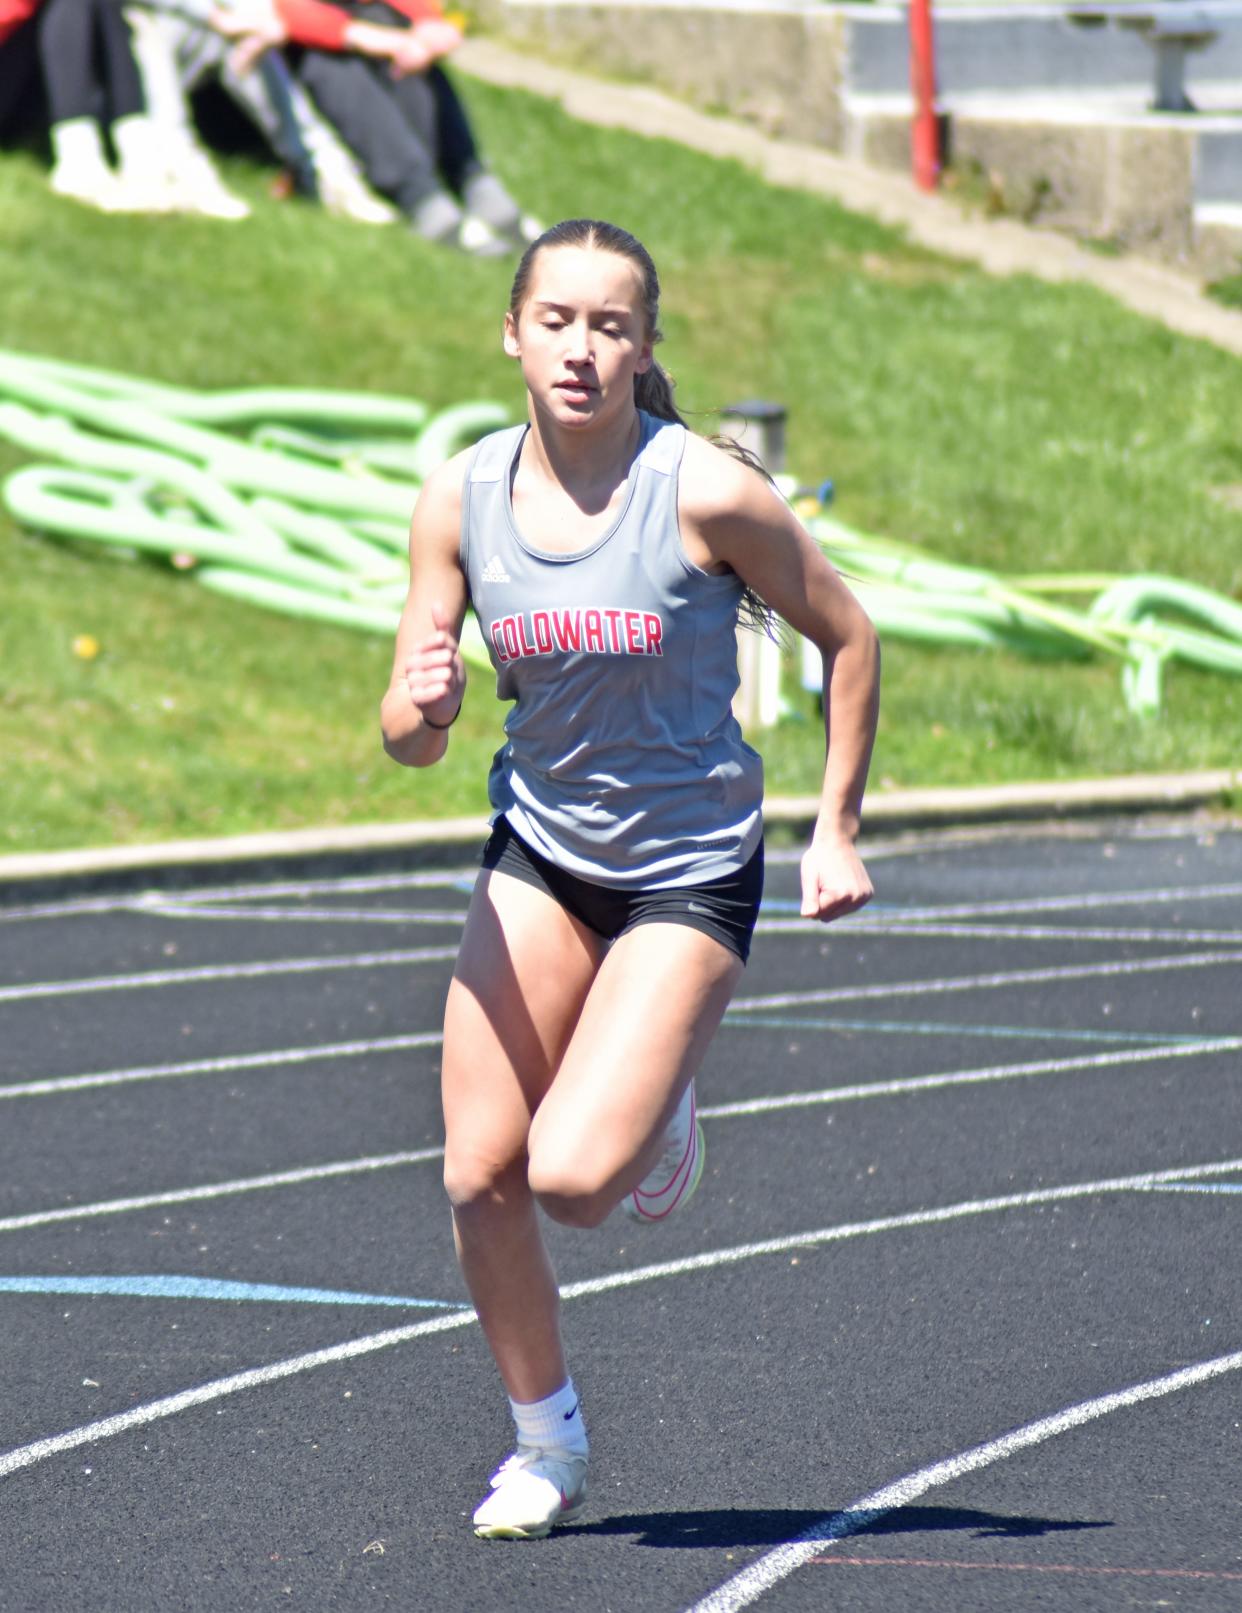 Ella Grabowski broke the Coldwater High School long jump record